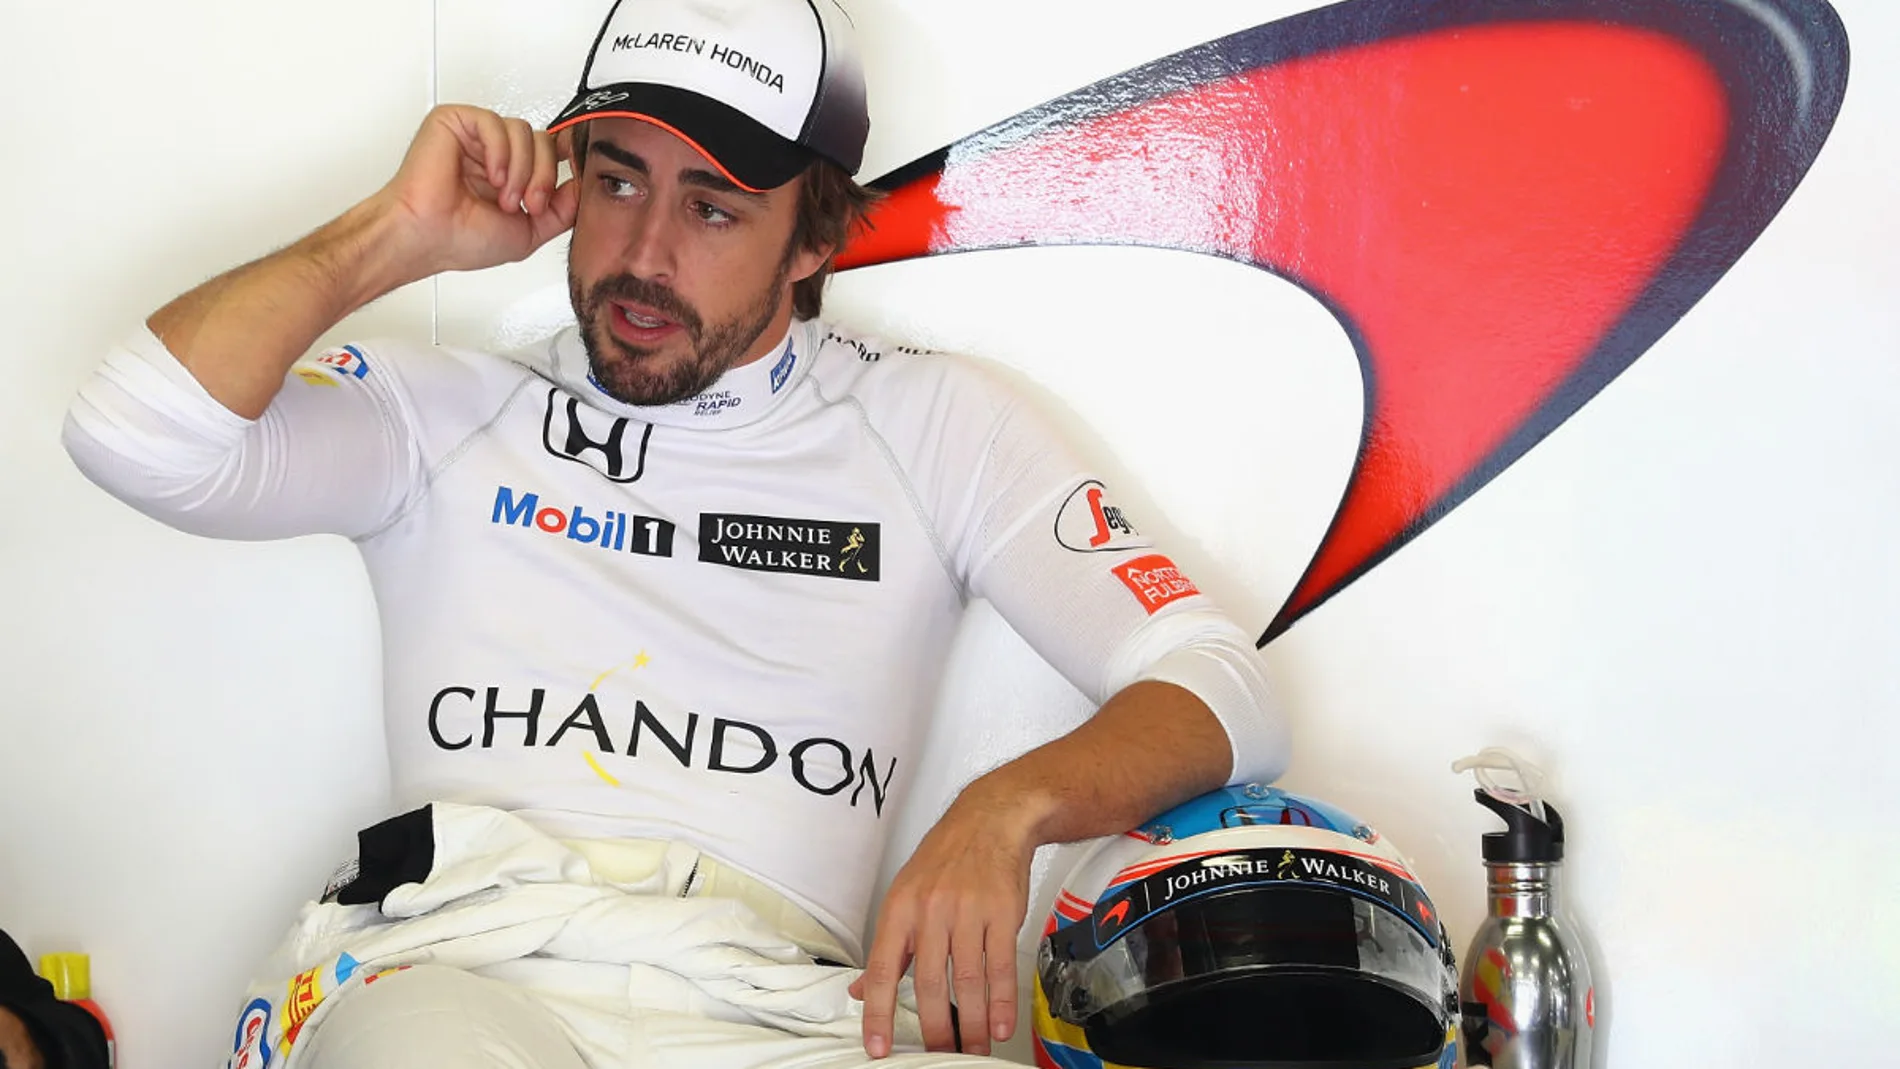 Fernando Alonso, en el box de McLaren-Honda